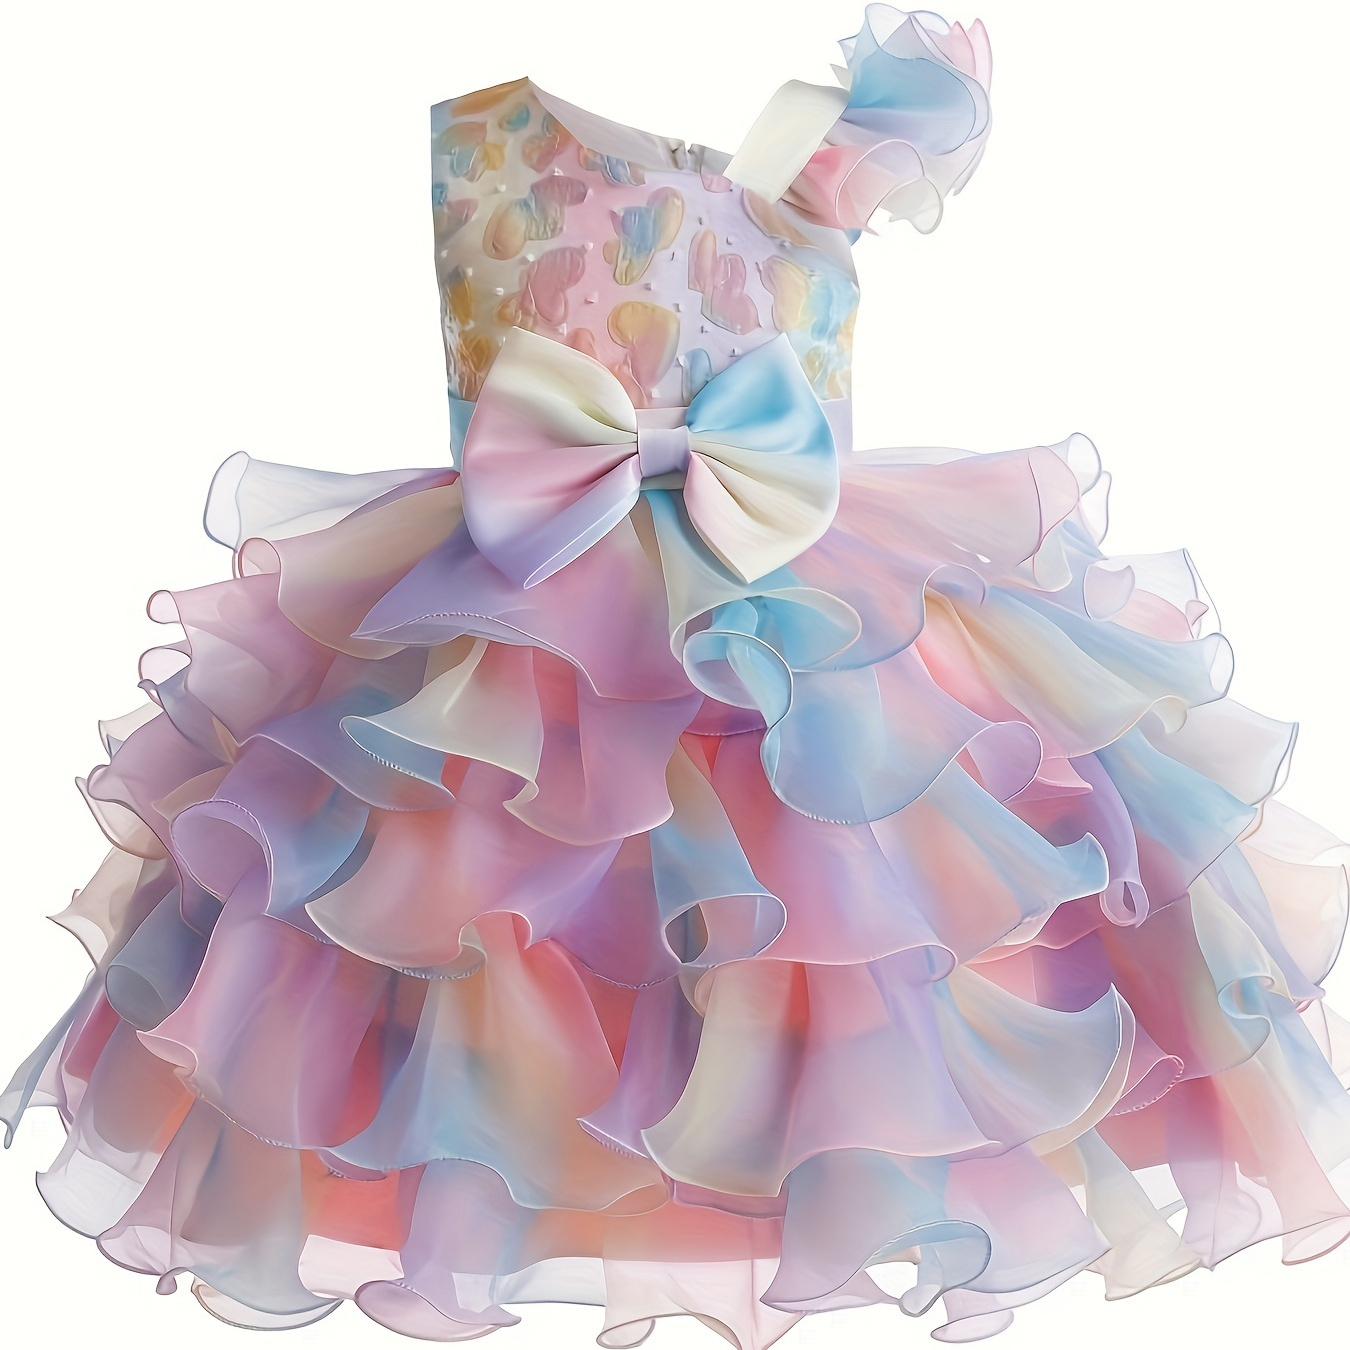 

Girls Elegant Rainbow Princess Dress With Bowknot Flutter Trim Mesh Dress Tutu Dress For Party, Performance, Birthday